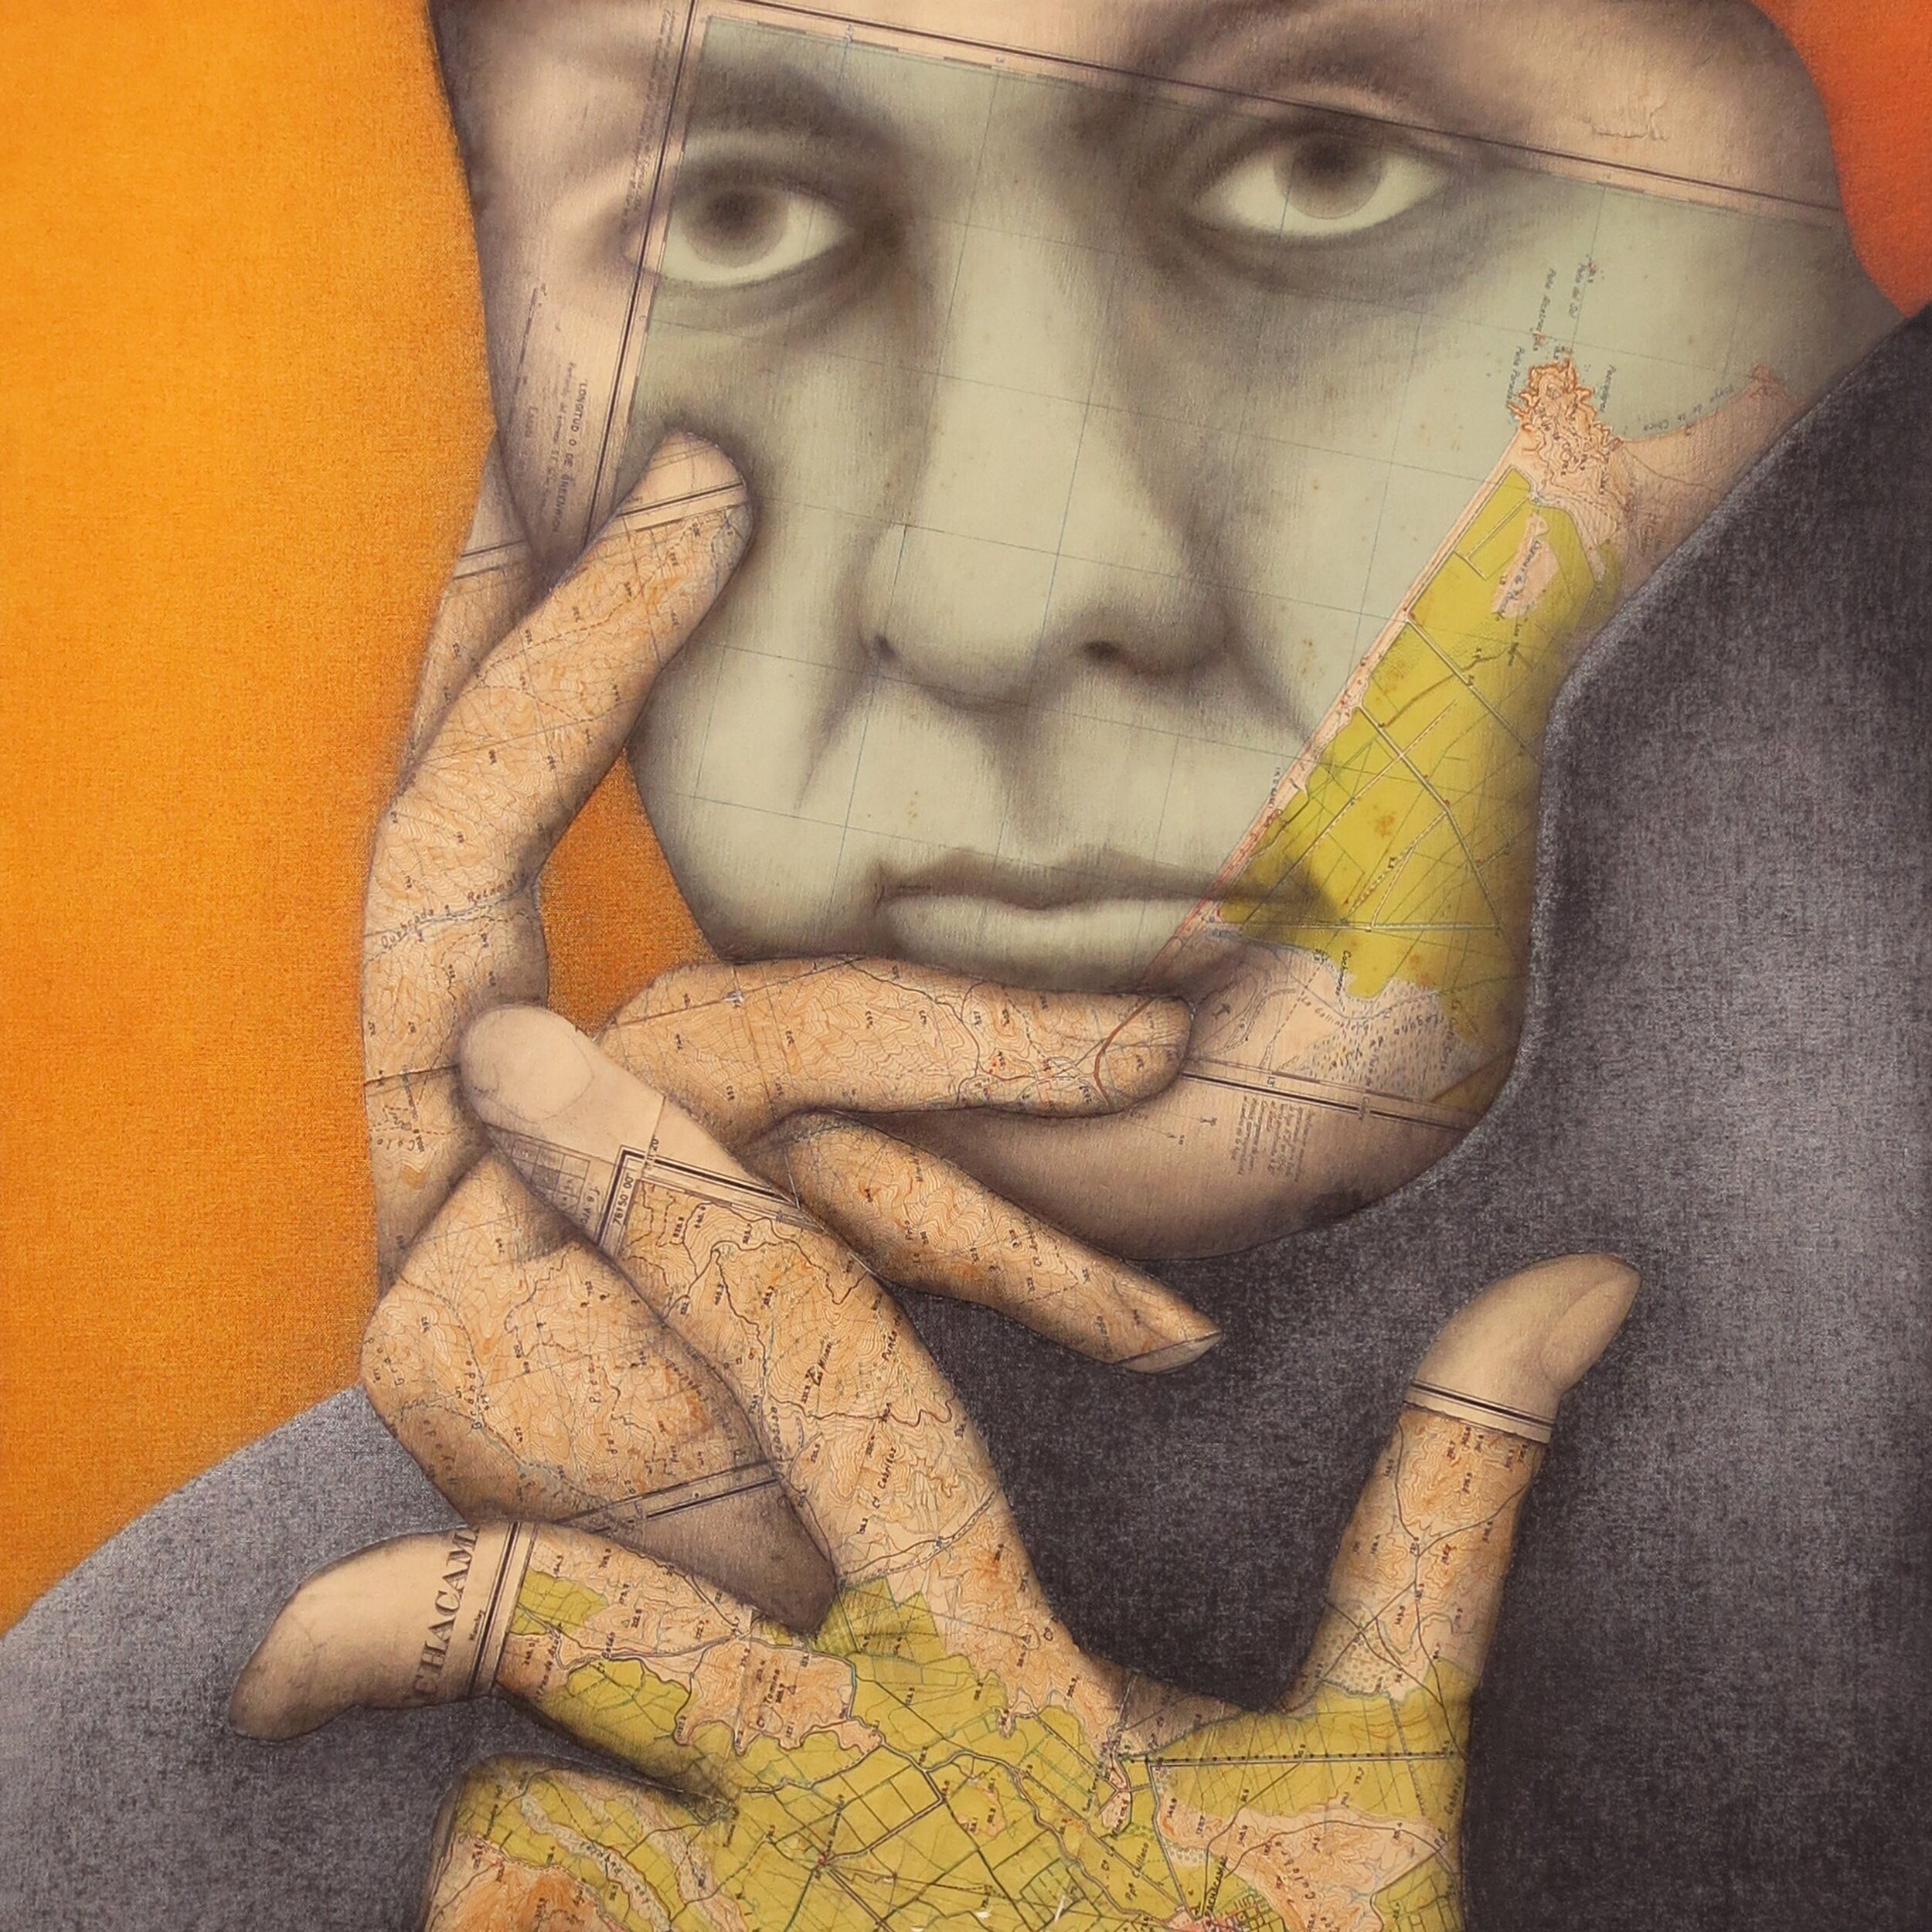   Gonzalo García Callegari   Serie Dibujo infinito   ,  2020 Acrílico, pastel y collage sobre papel 78 x 64 cm Fixed Project Lima 